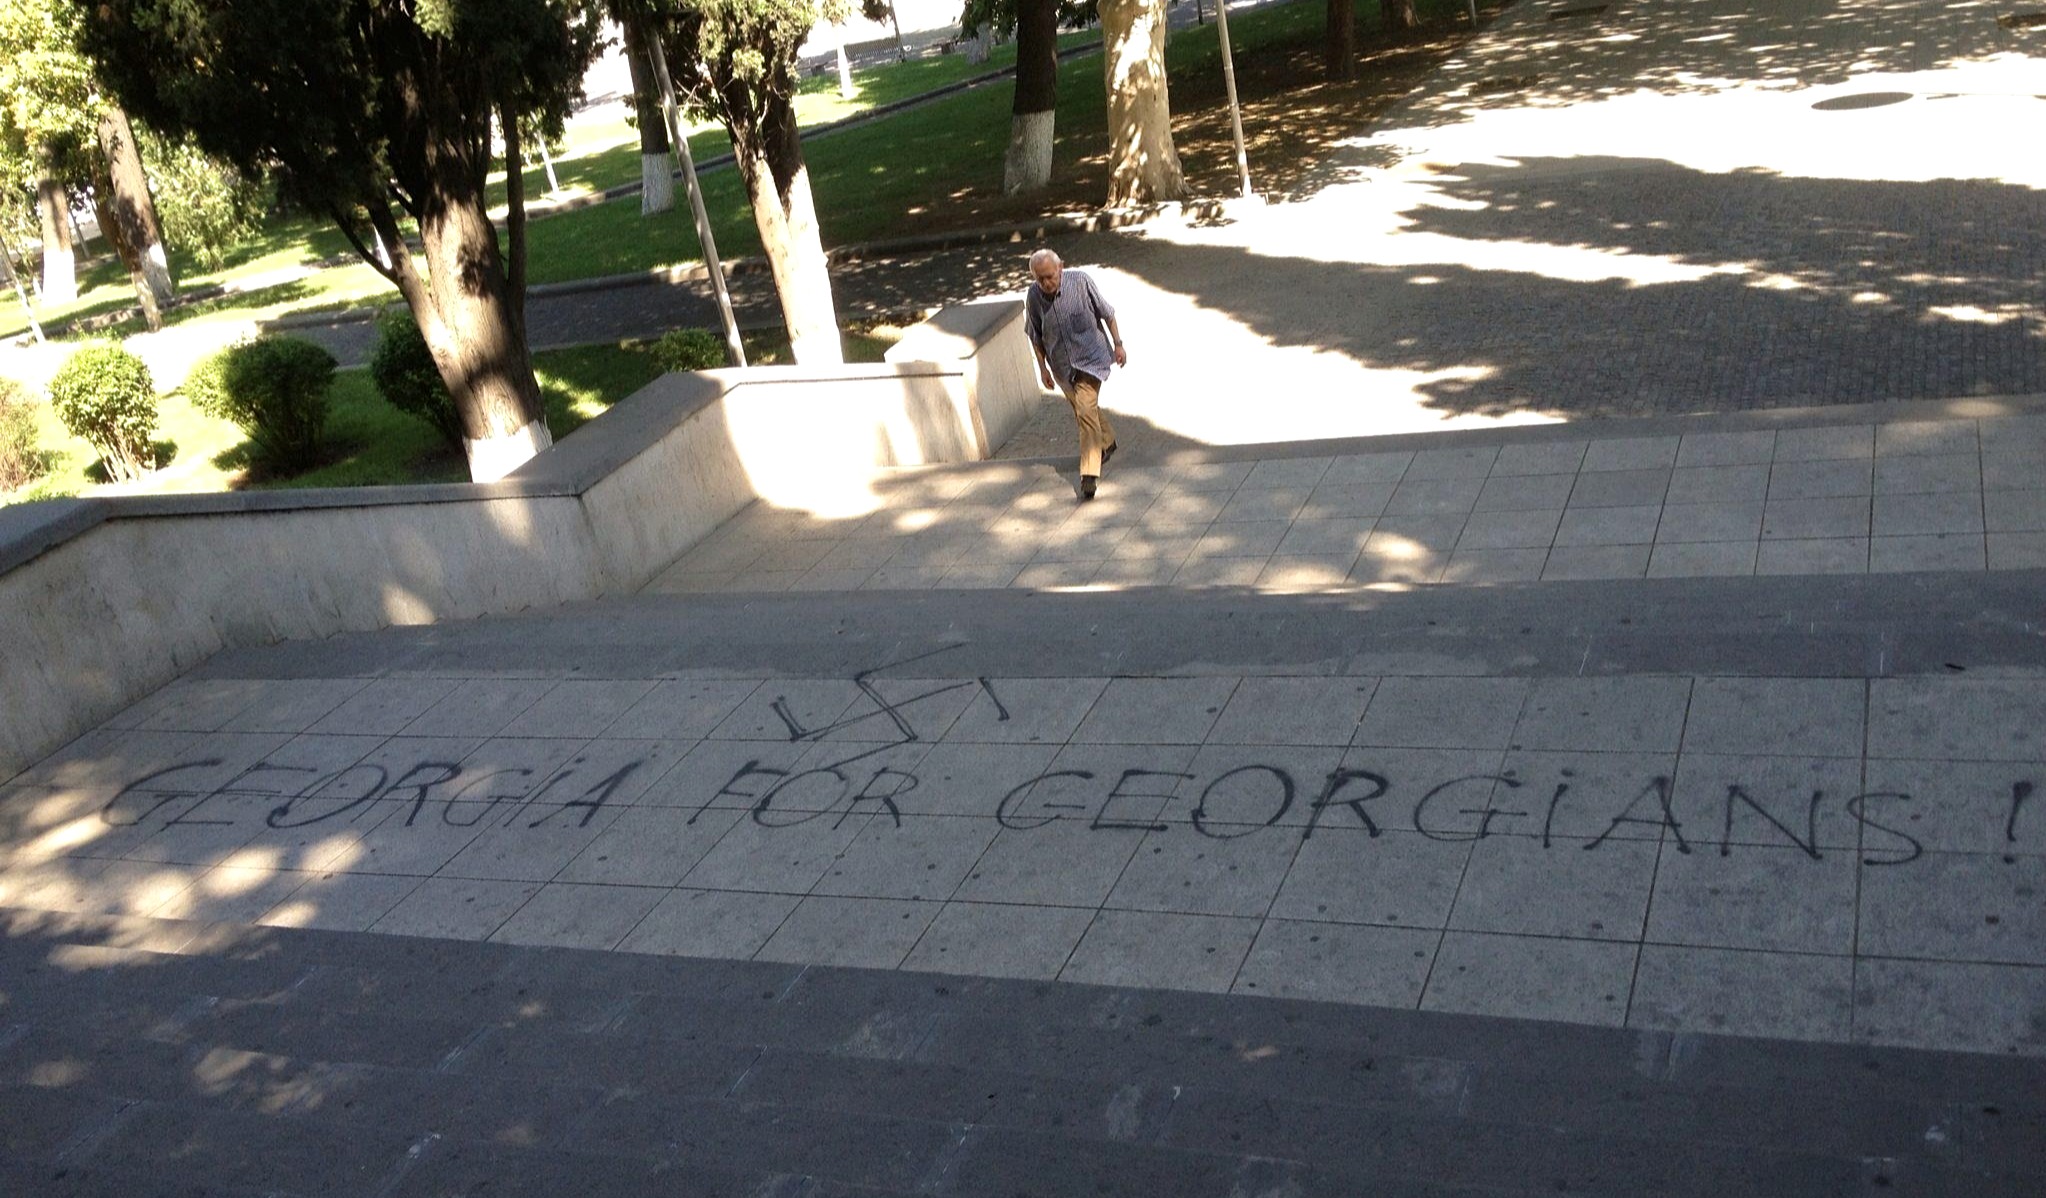 Georgia for Georgians slogan